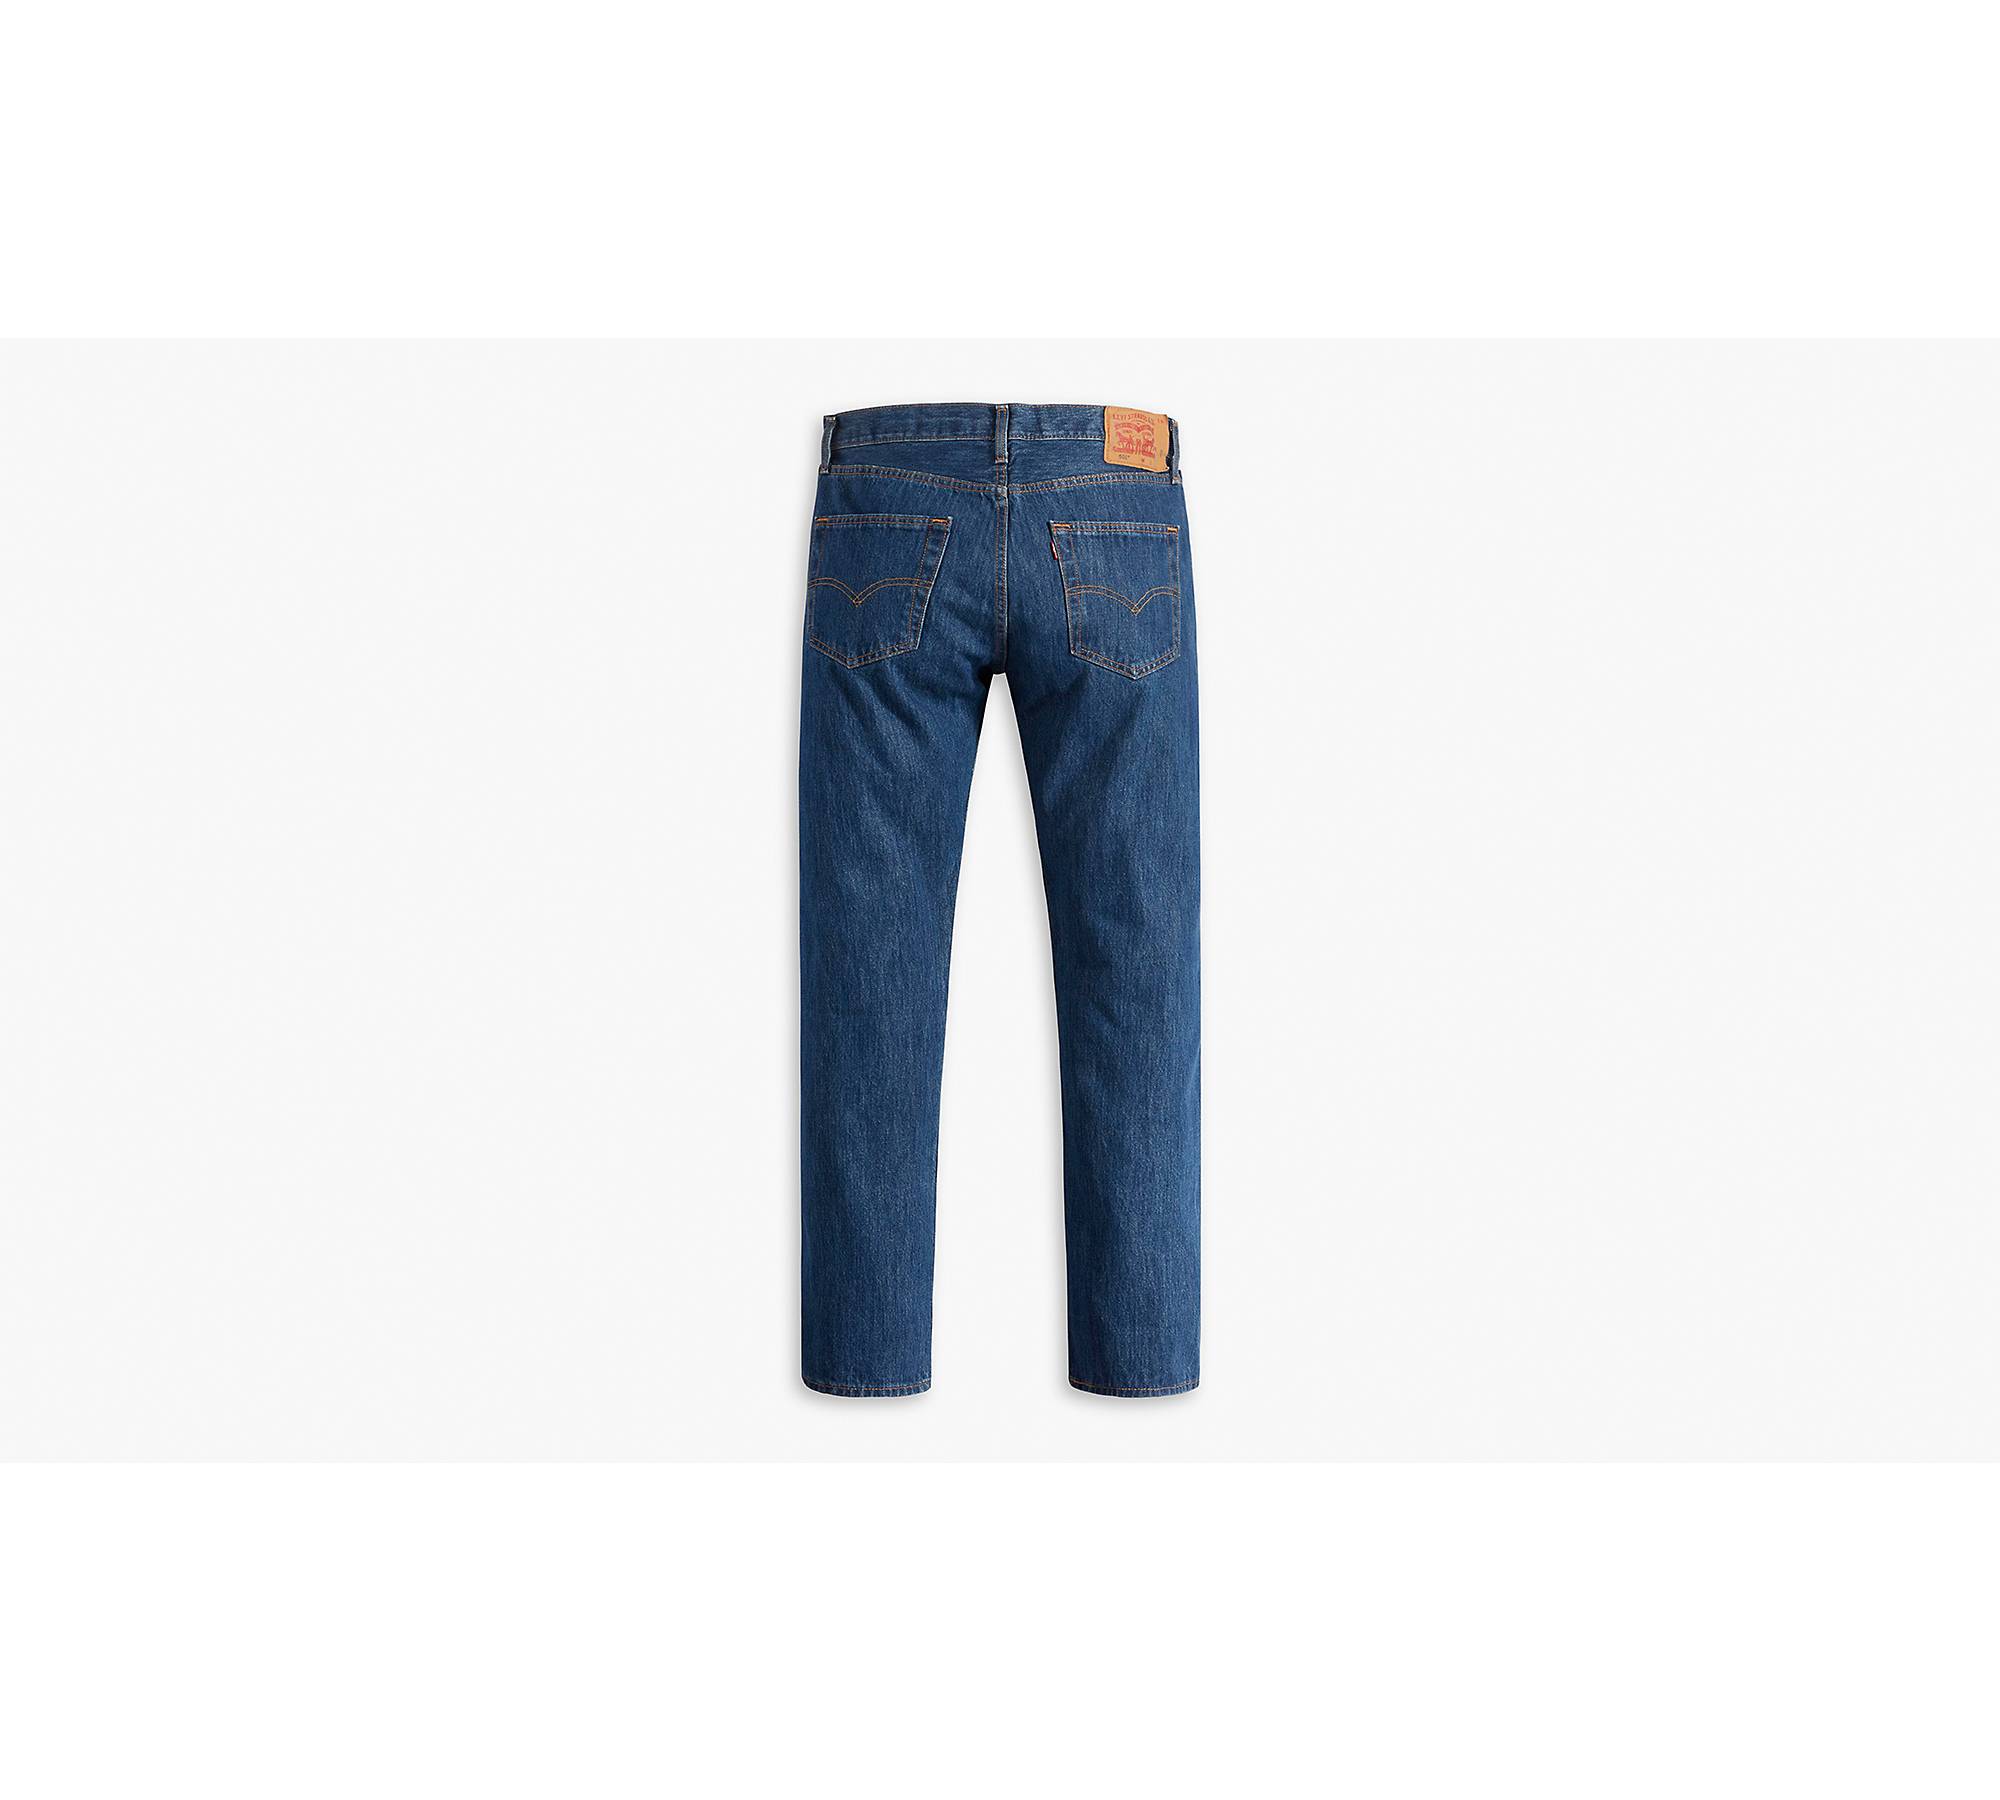 Men's LEVIS 501 Premium Black Stonewashed Jeans Regular 